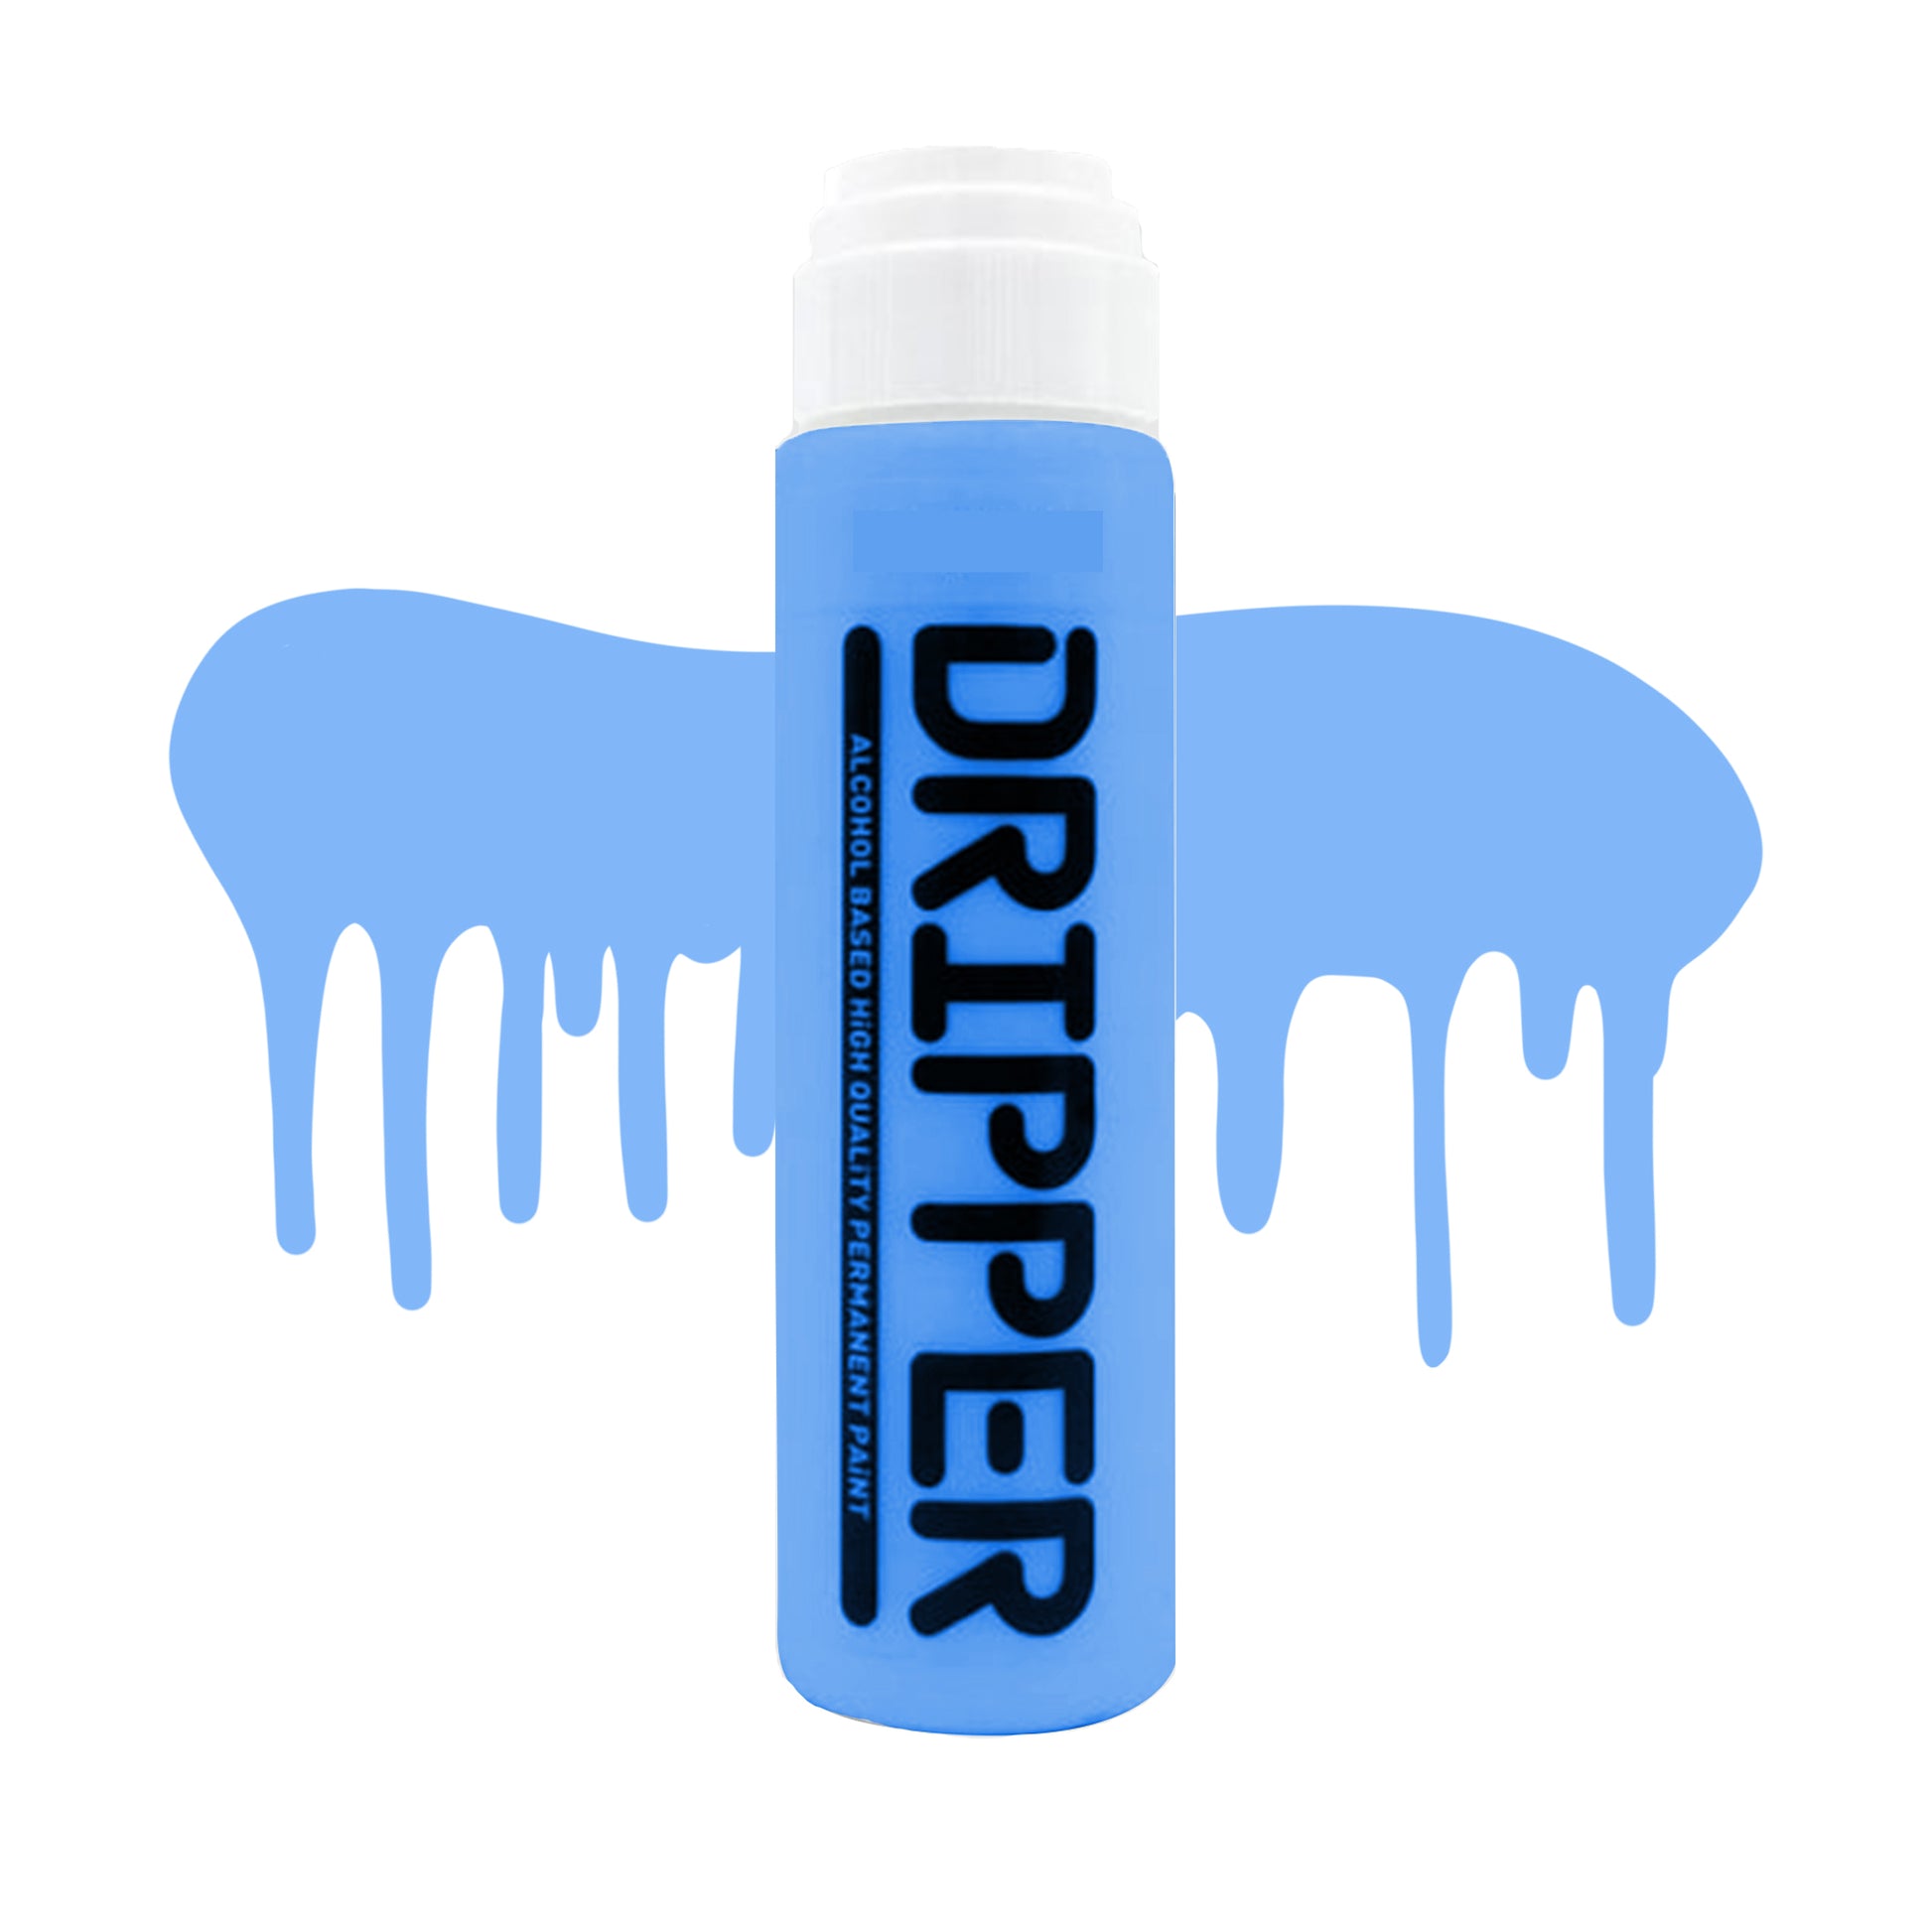 Dope Paint, Graffiti Squeeze Dripper Mop Marker in light blue.